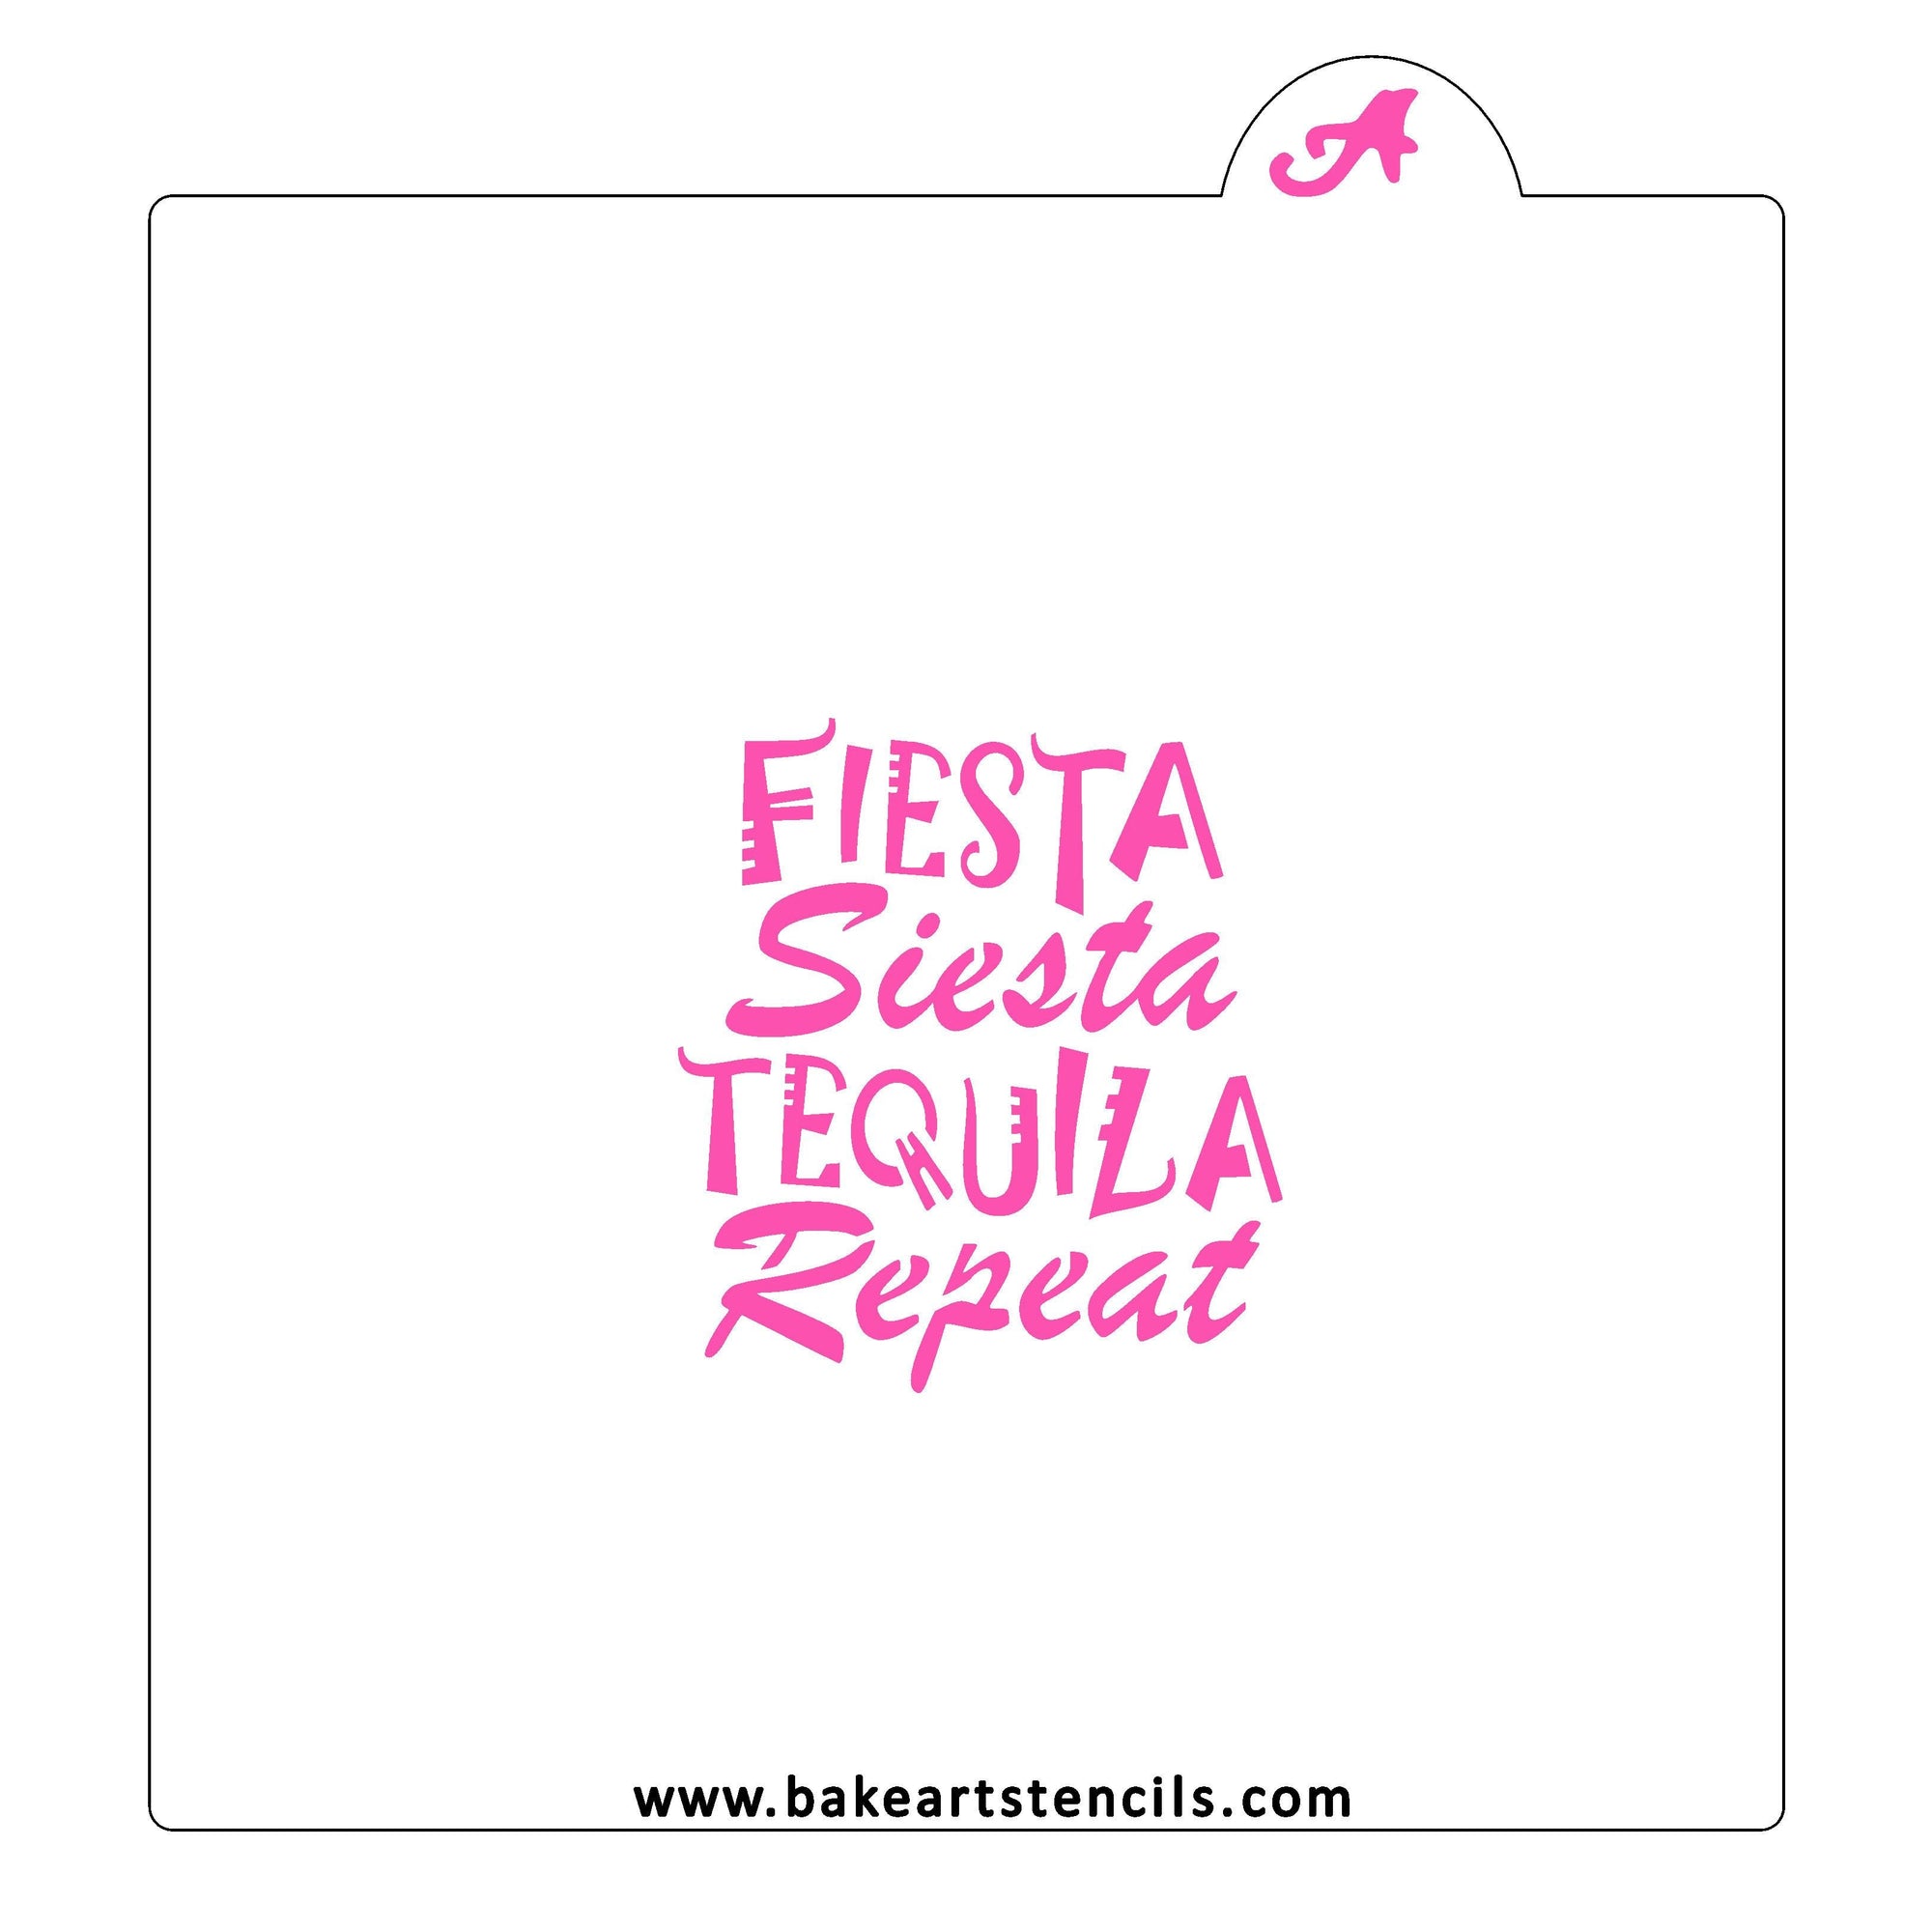 Fiesta Siesta Tequila Repeat Stencil bakeartstencil